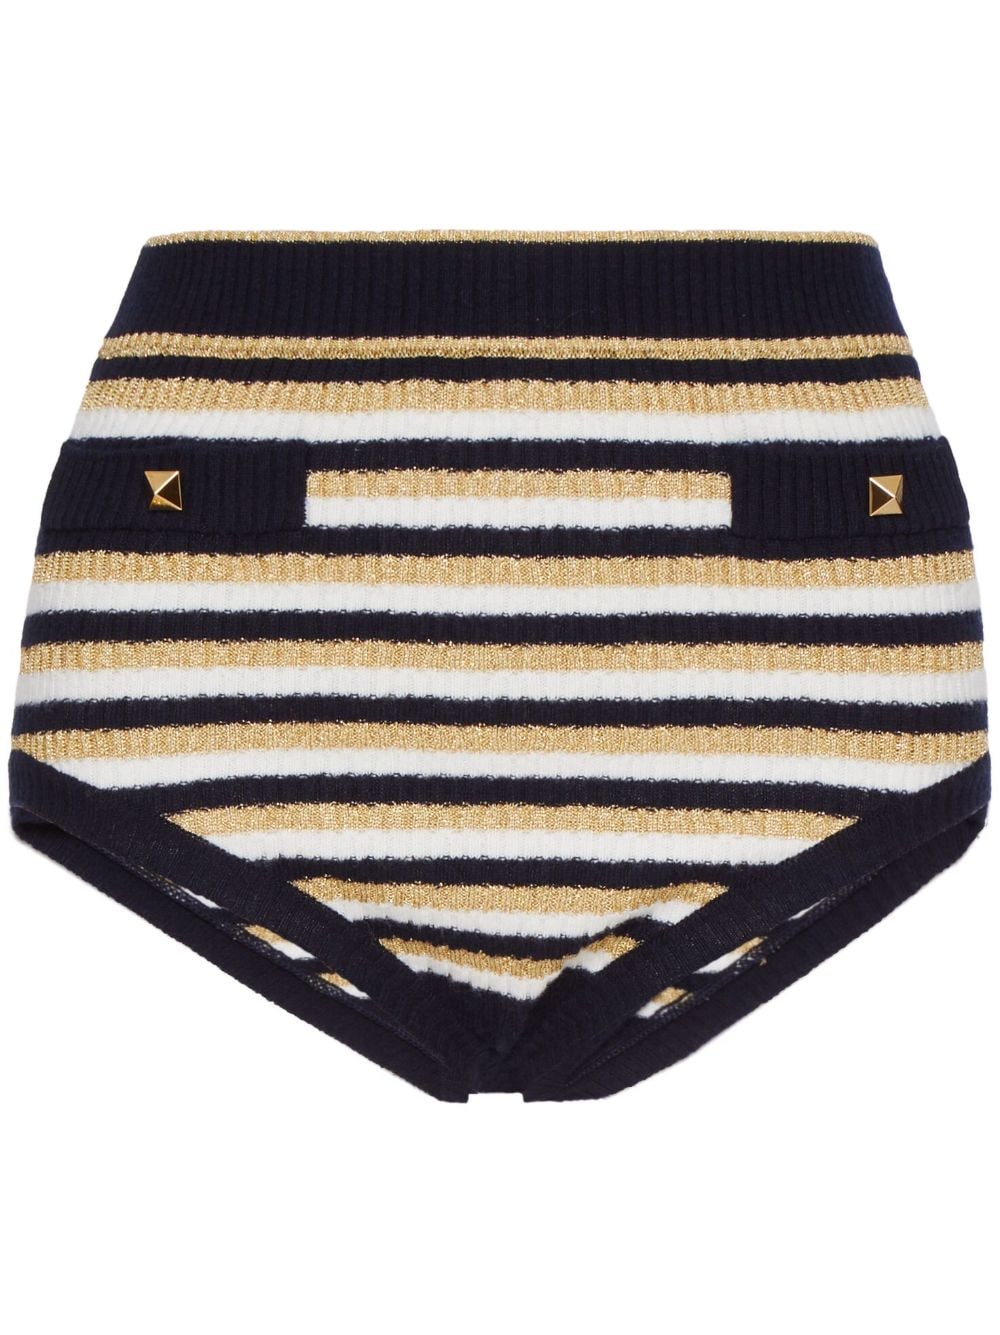 Valentino Garavani Roman Stud striped mini shorts - Black